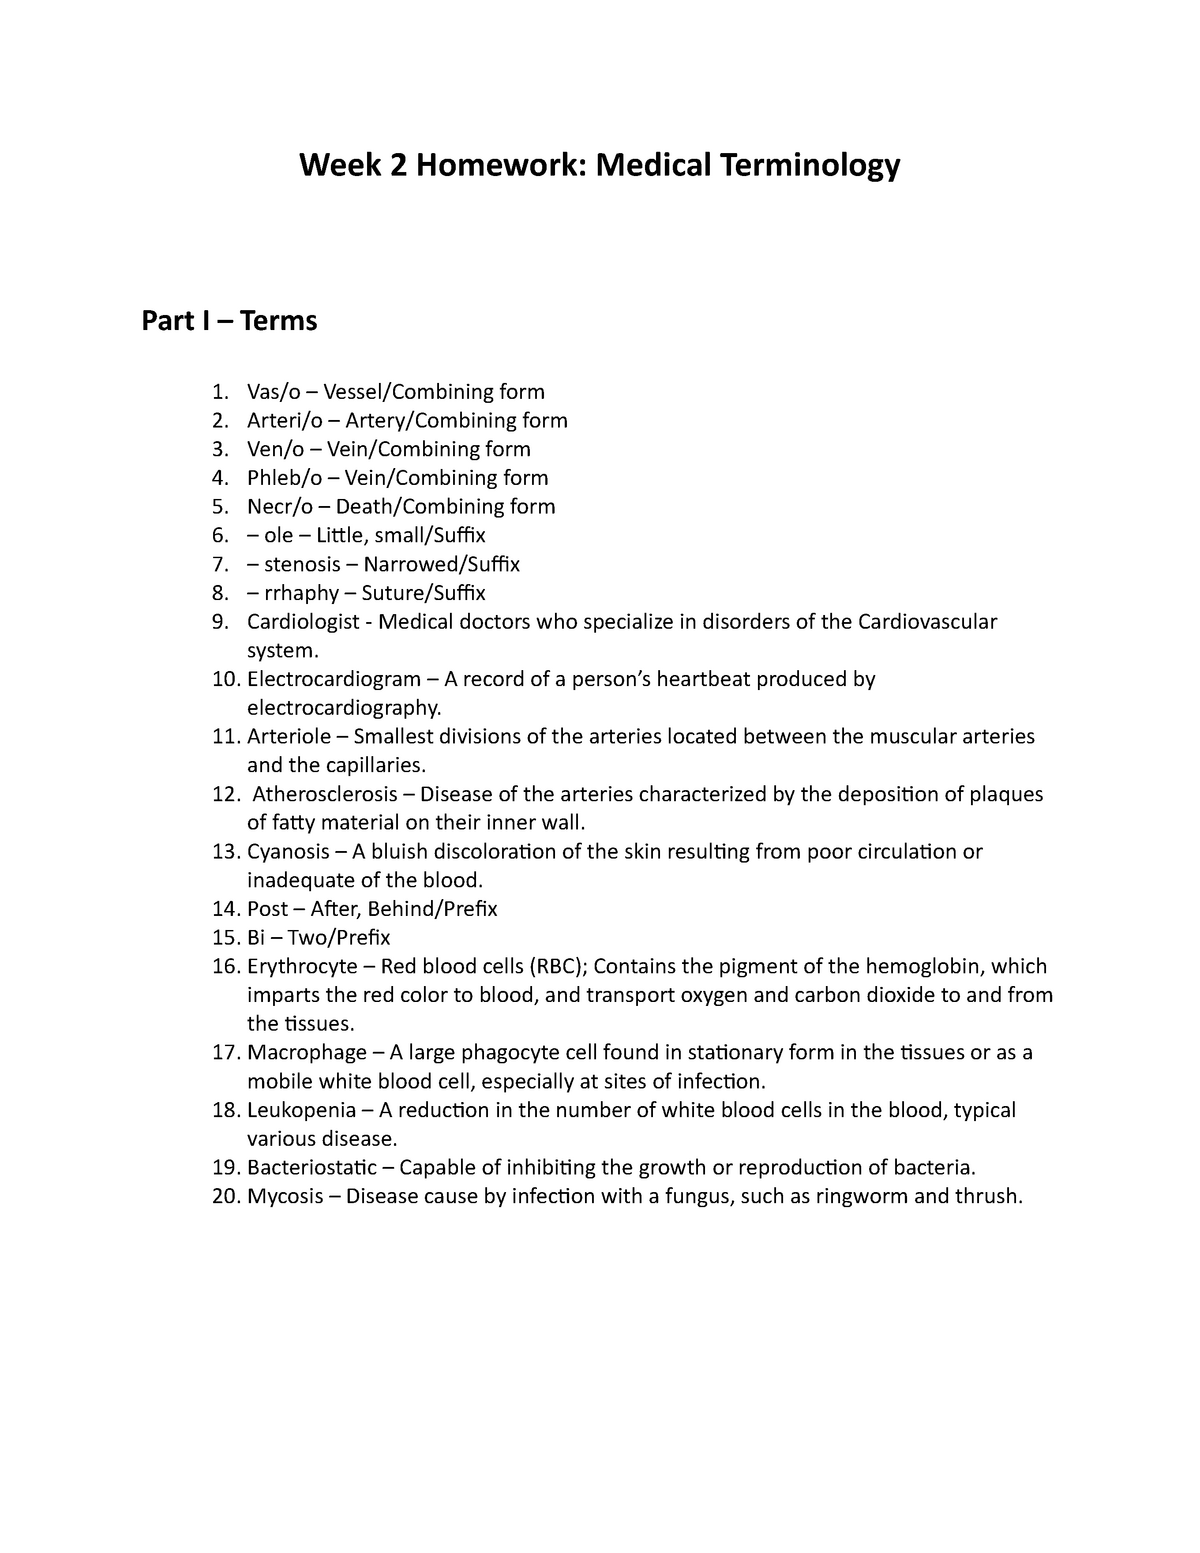 assignment 1. chapter homework medical terminology